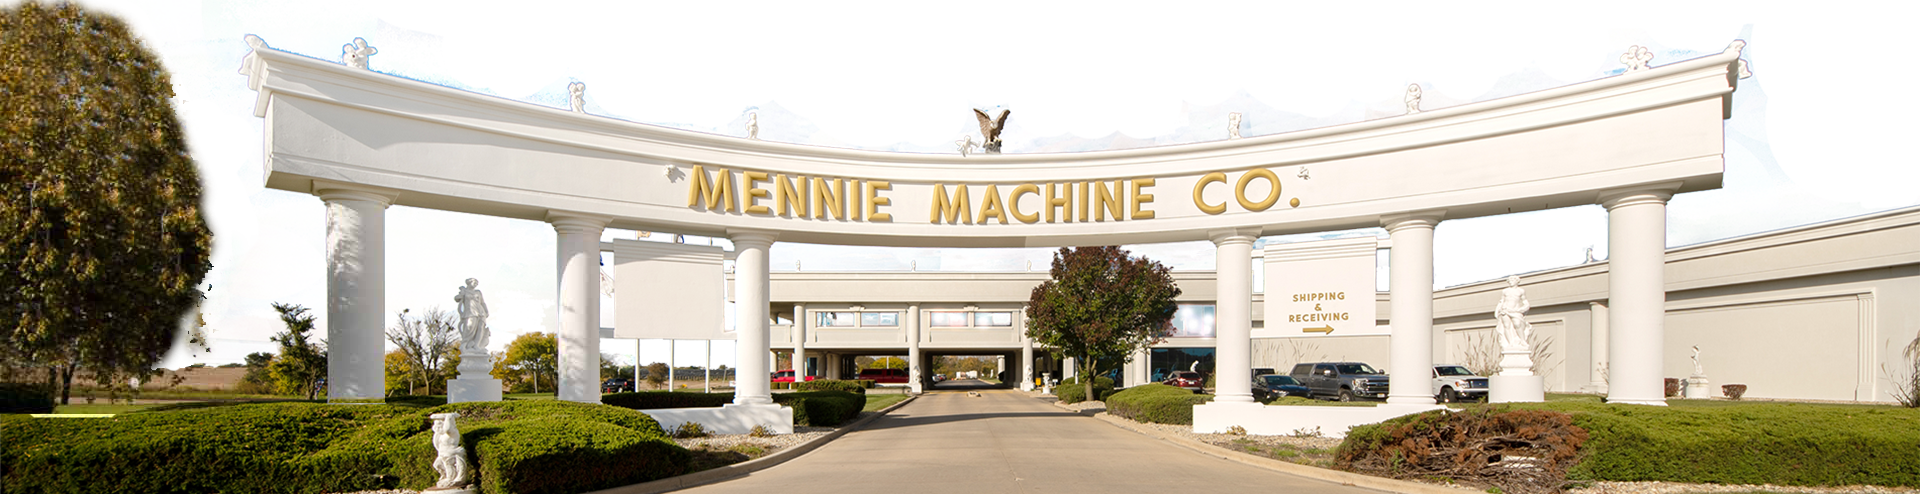 mennie machine company entrance bldg med